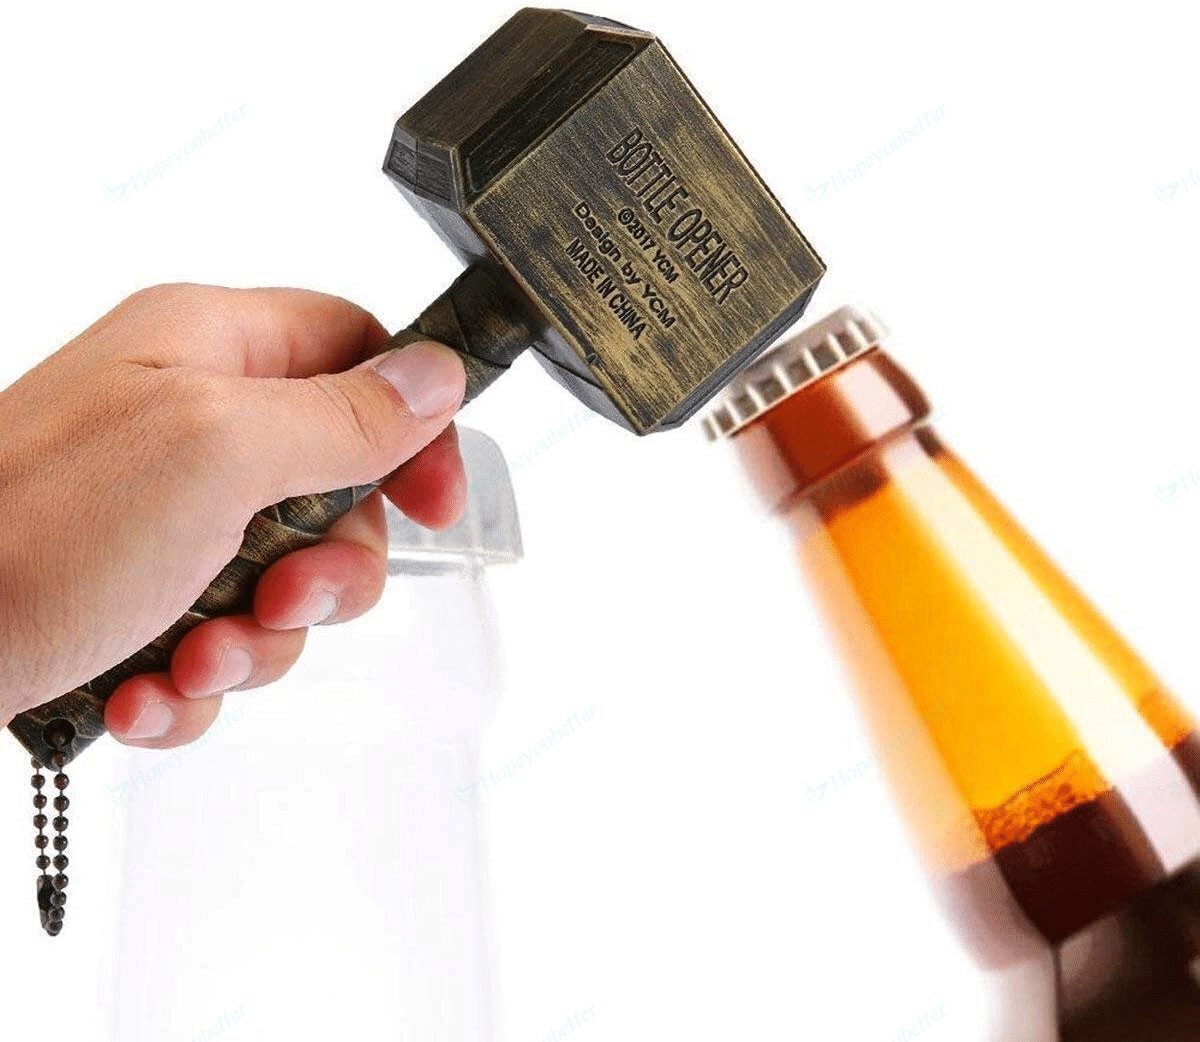 Miracle hammer beer bottle opener